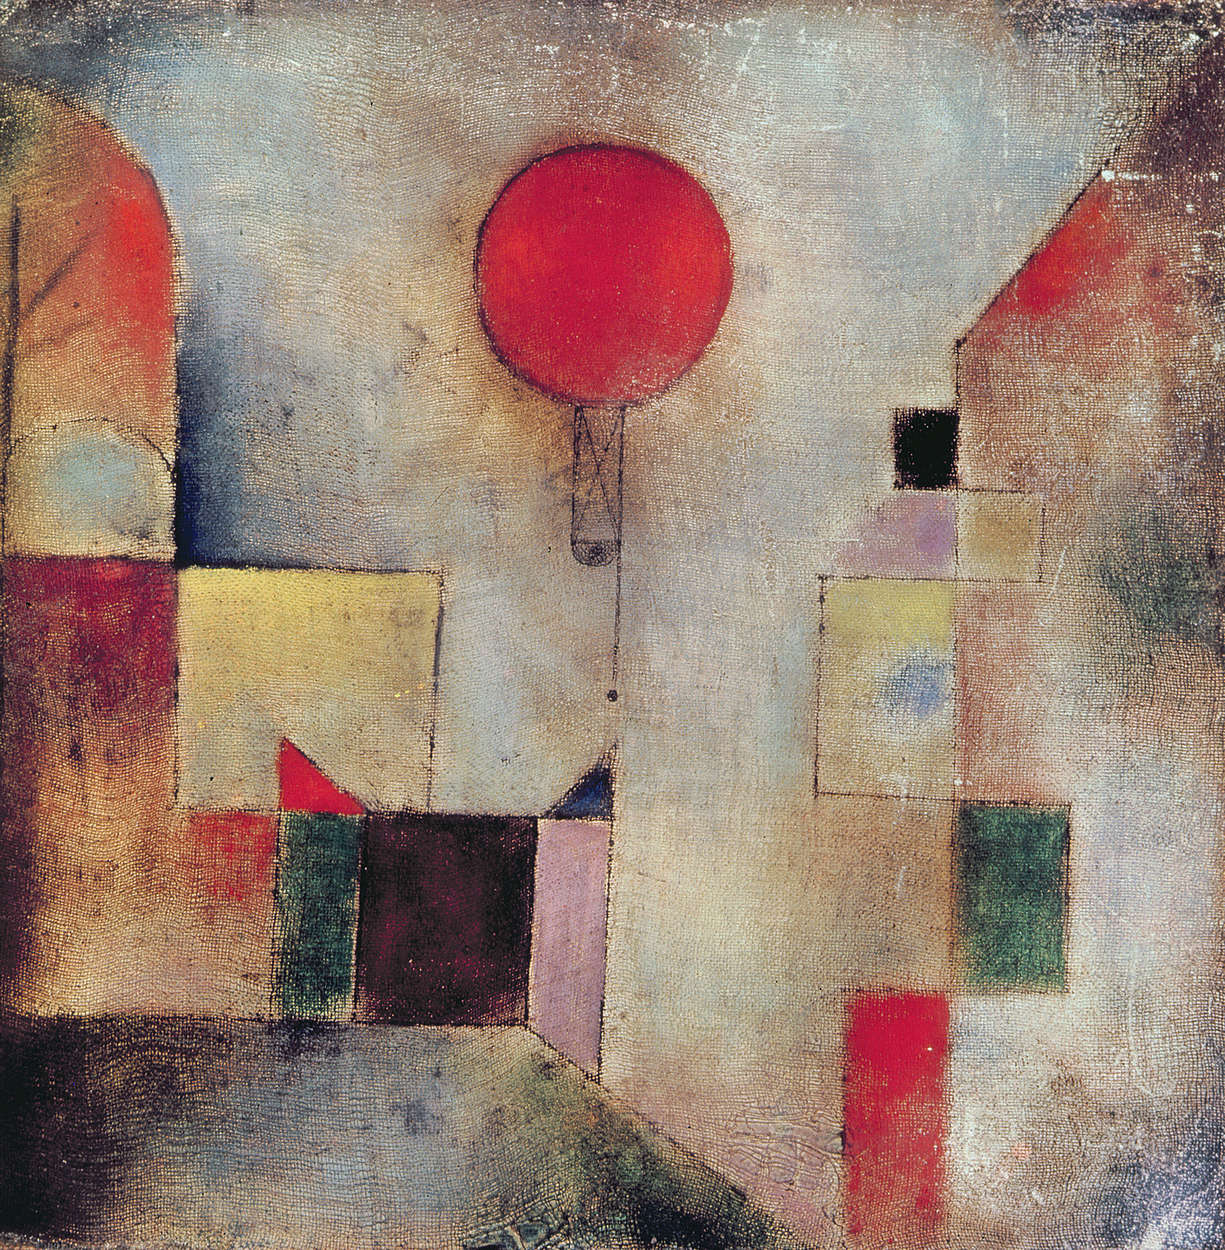             Fototapete "Roter Ballon" von Paul Klee
        